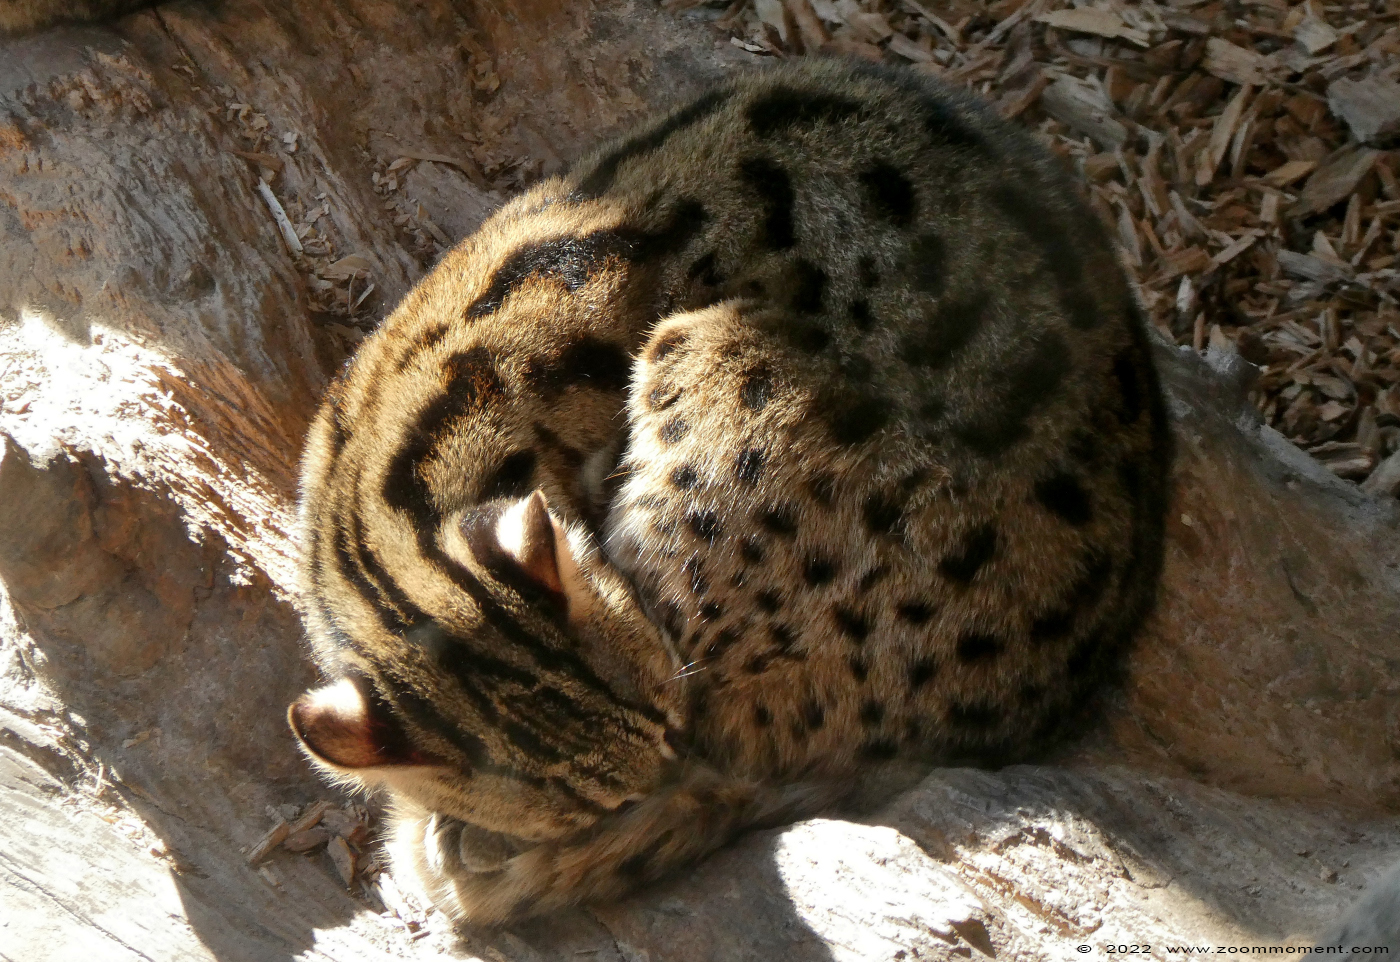 Bengaalse tijgerkat ( Prionailurus bengalensis ) leopard cat Bengalkatze
Palavras chave: Monde Sauvage Belgium Bengaalse tijgerkat Prionailurus bengalensis leopard cat Bengalkatze